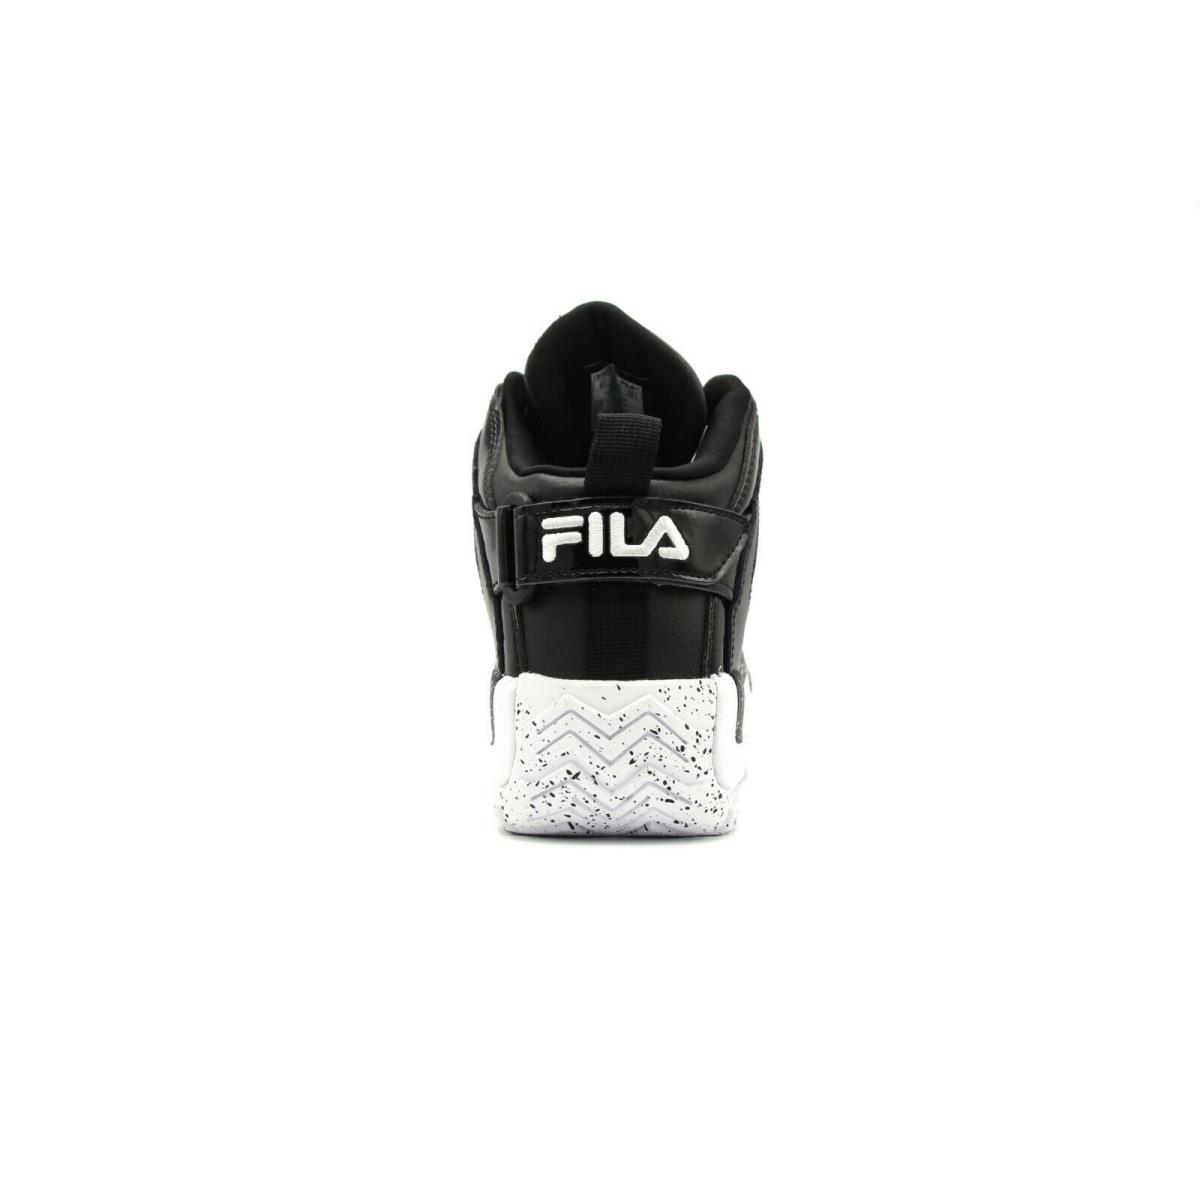 Fila shoes  - Black 3